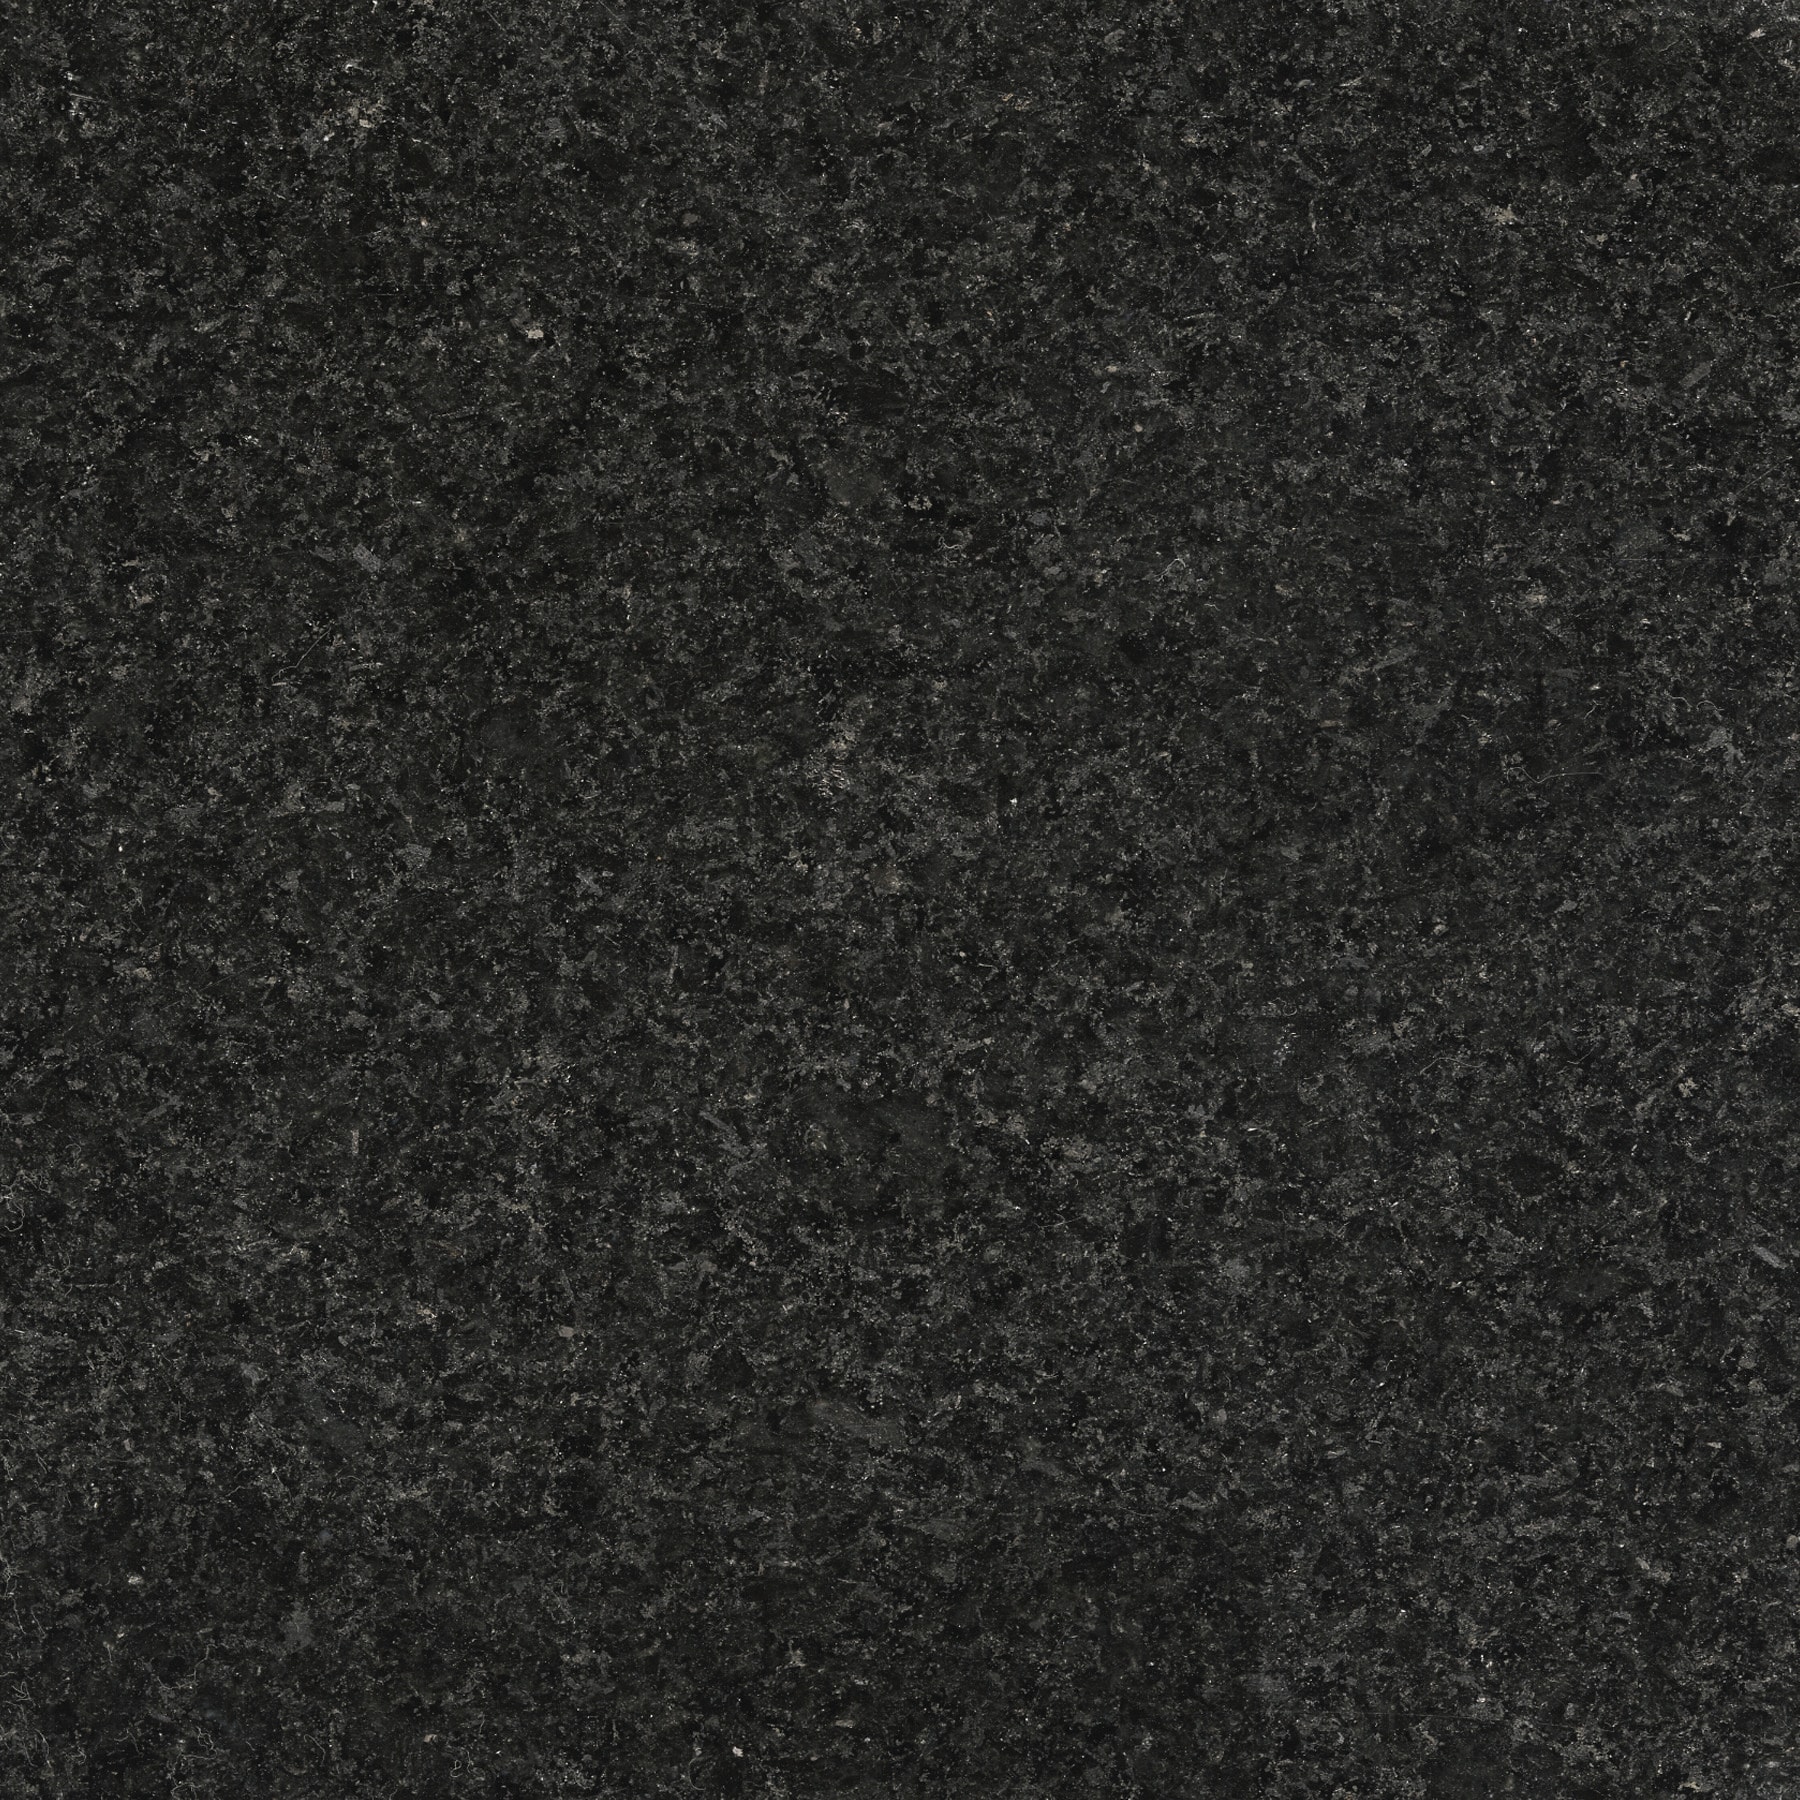 SenSa 4 In. x 4 In. San Benedito Granite Black Kitchen Countertop SAMPLE  (4-in x 4-in) in the Kitchen Countertop Samples department at | Chinohosen